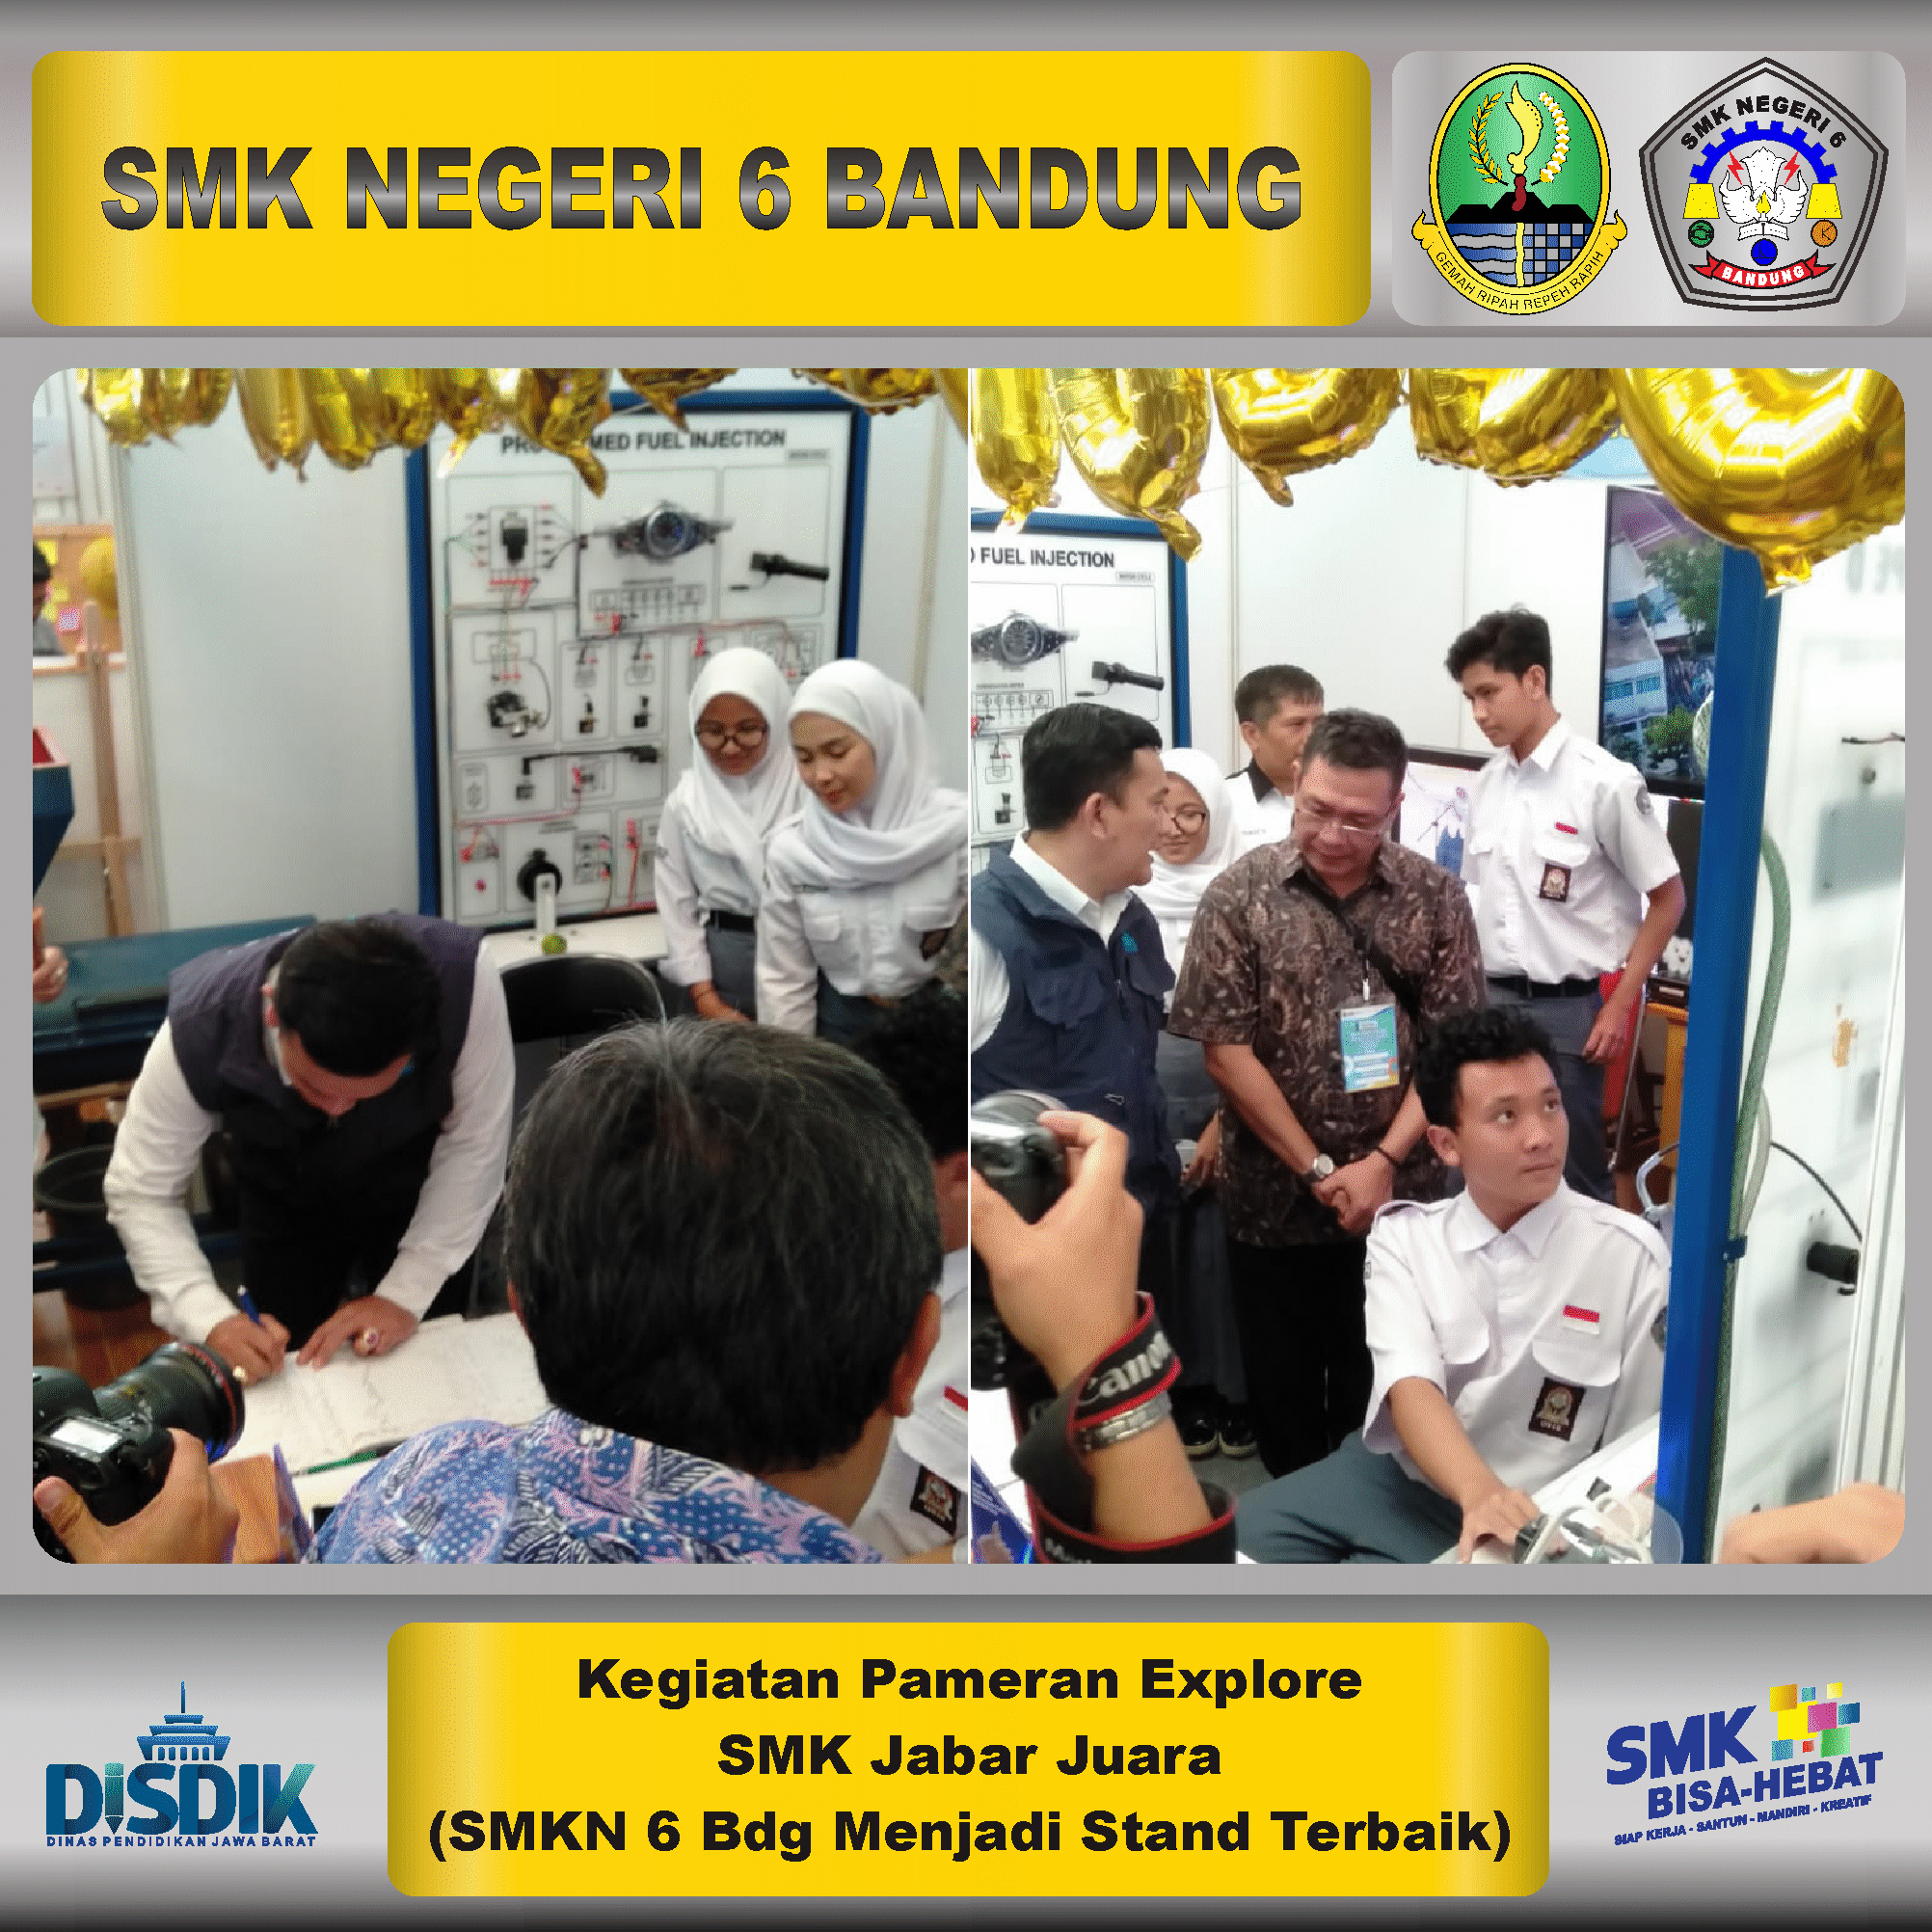 Kegiatan Pameran Explore SMK Jabar Juara (SMKN 6 Bandung Masuk Menjadi Stand Terbaik)